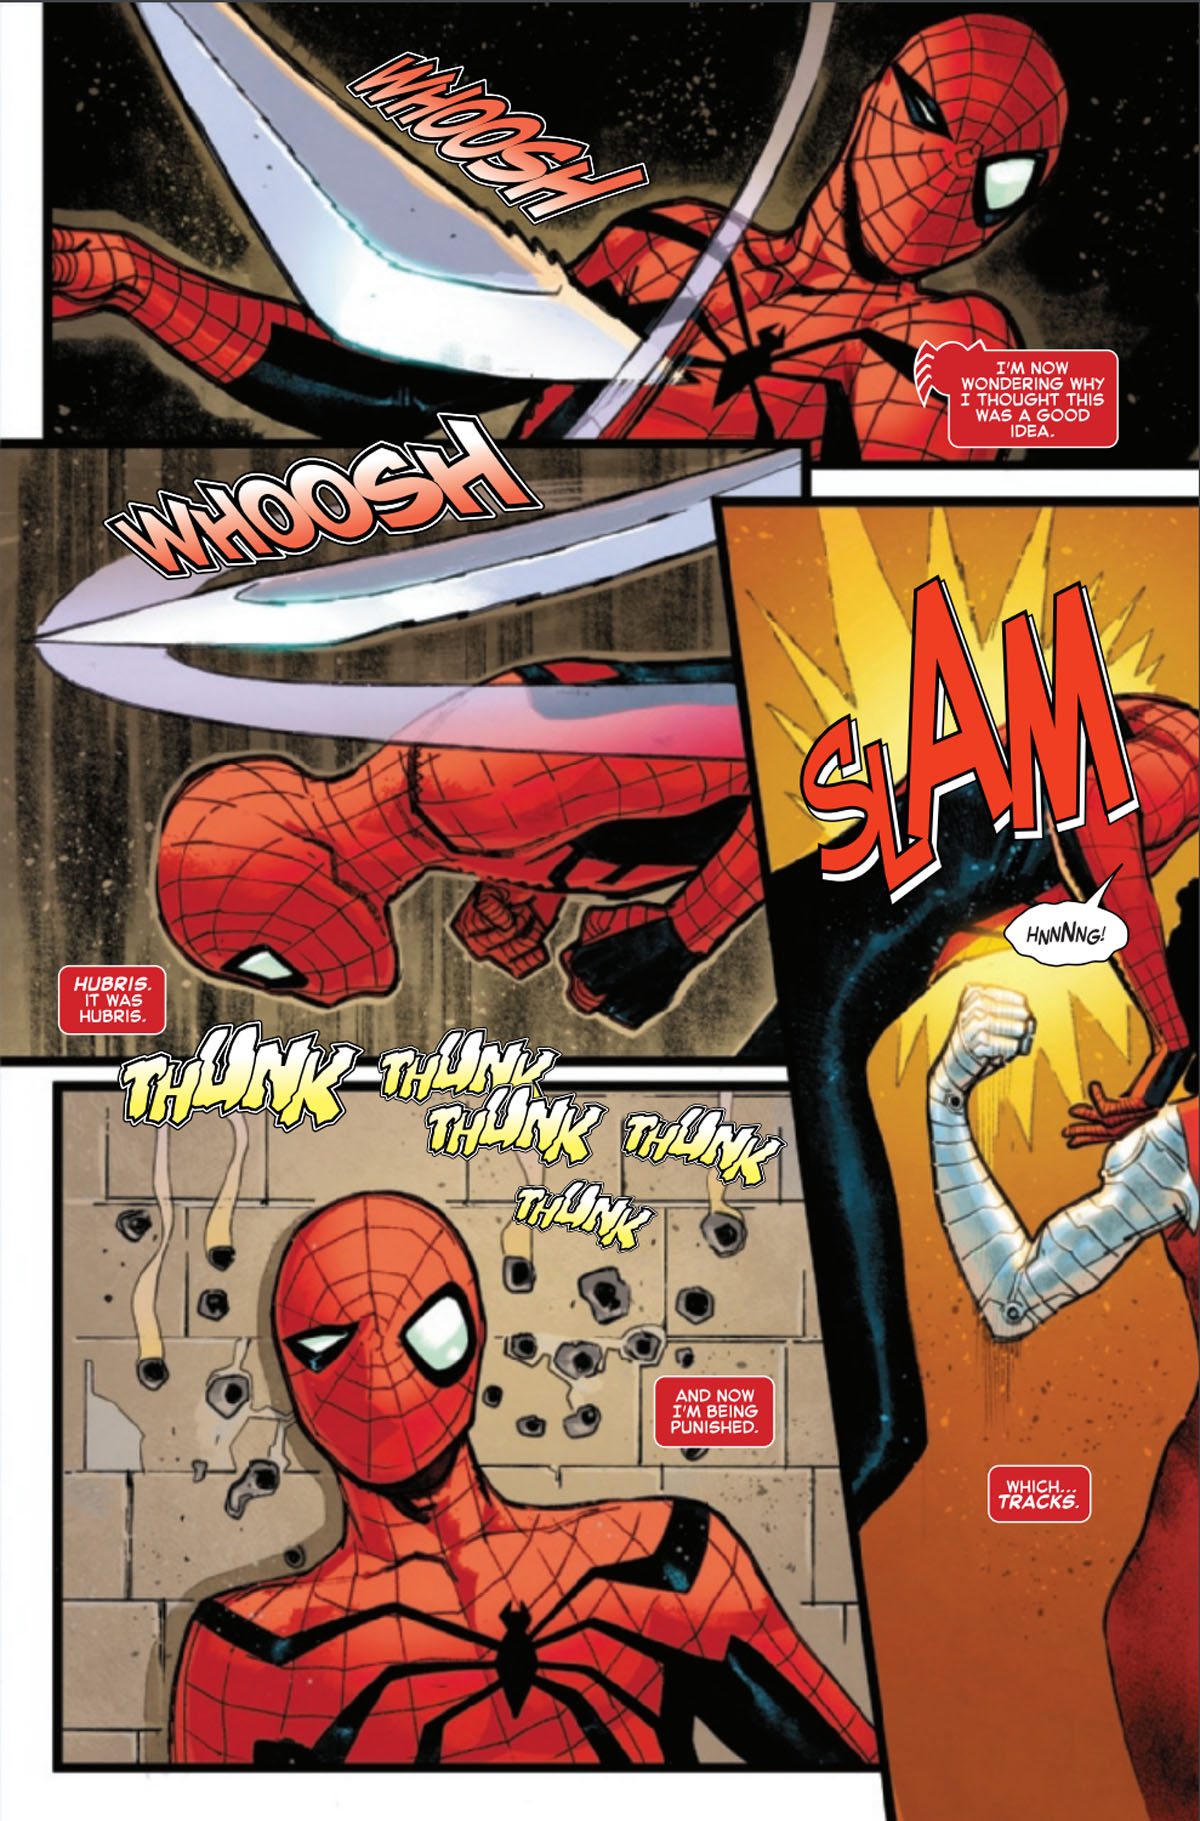 Amazing Spider-Man #77 page 1